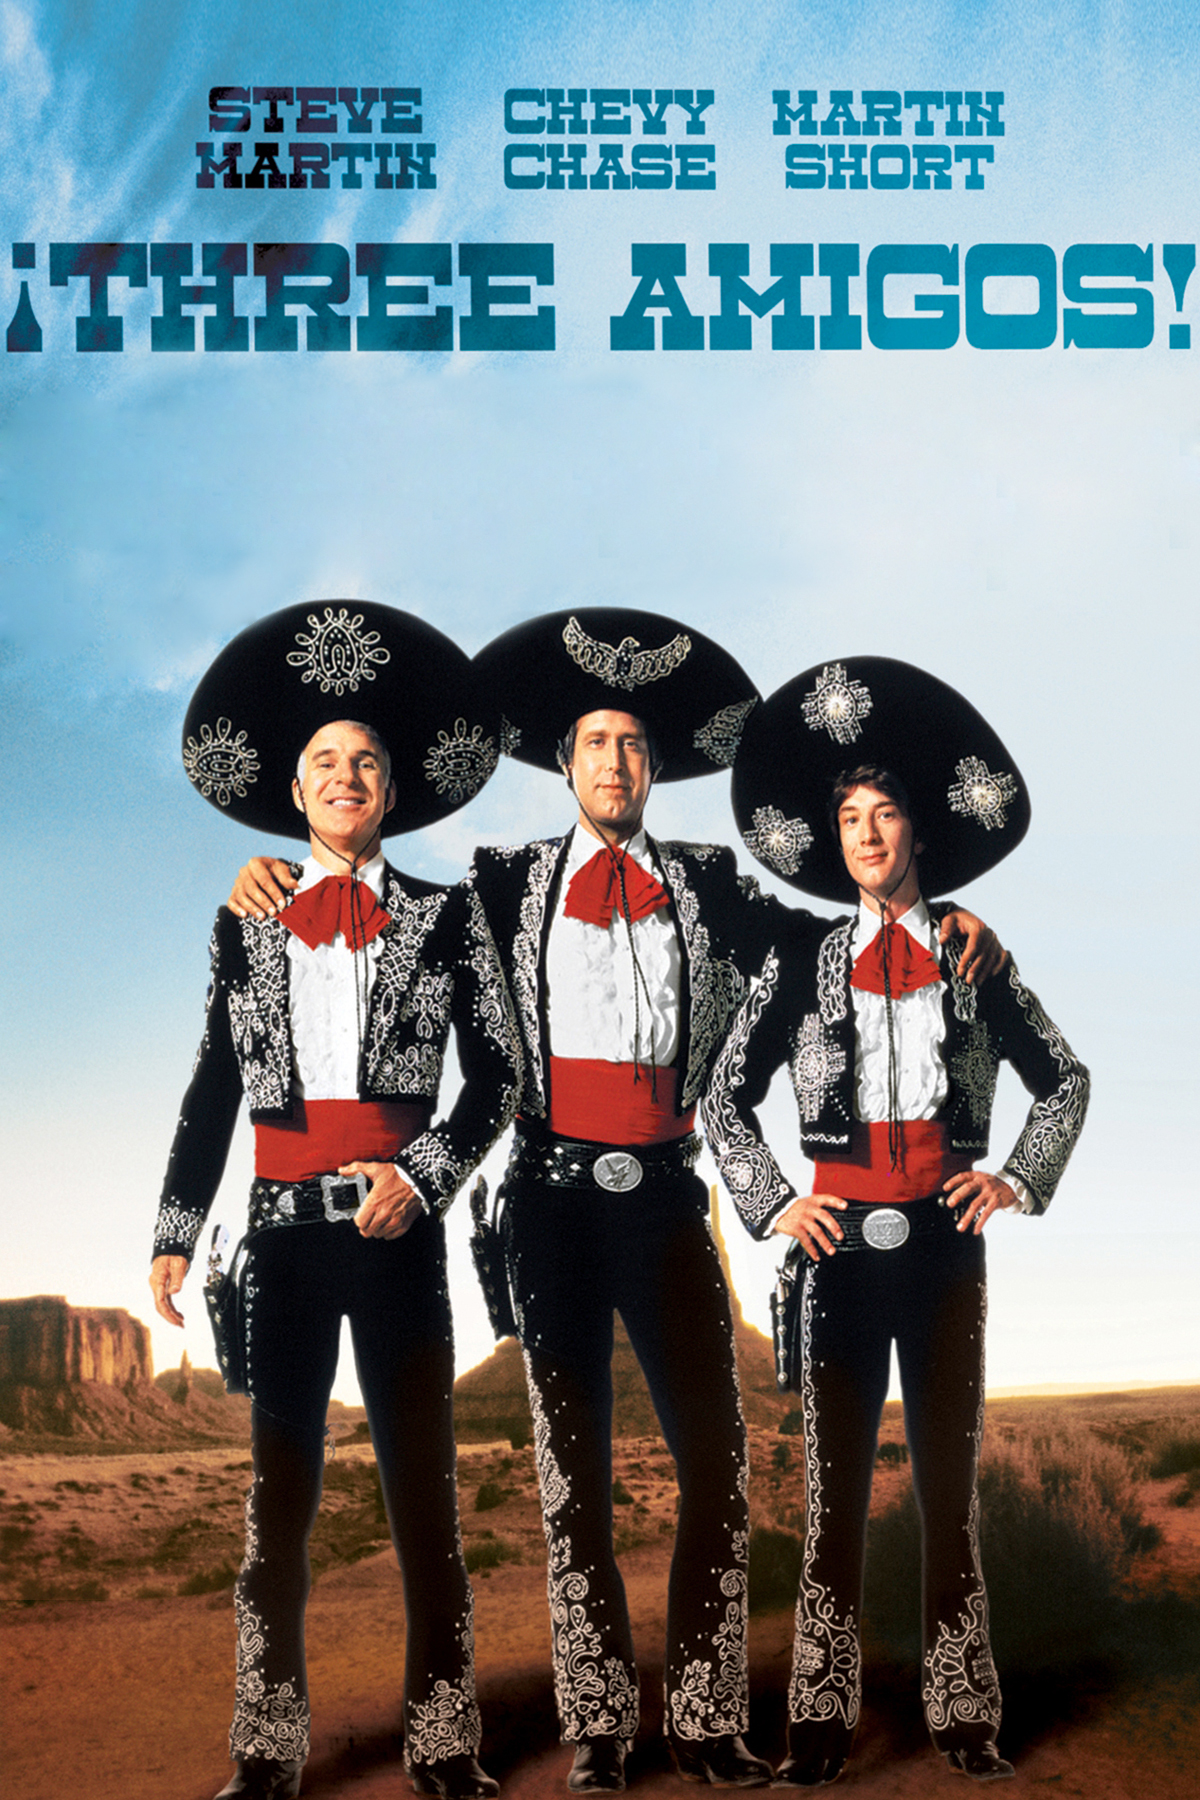 the three amigos